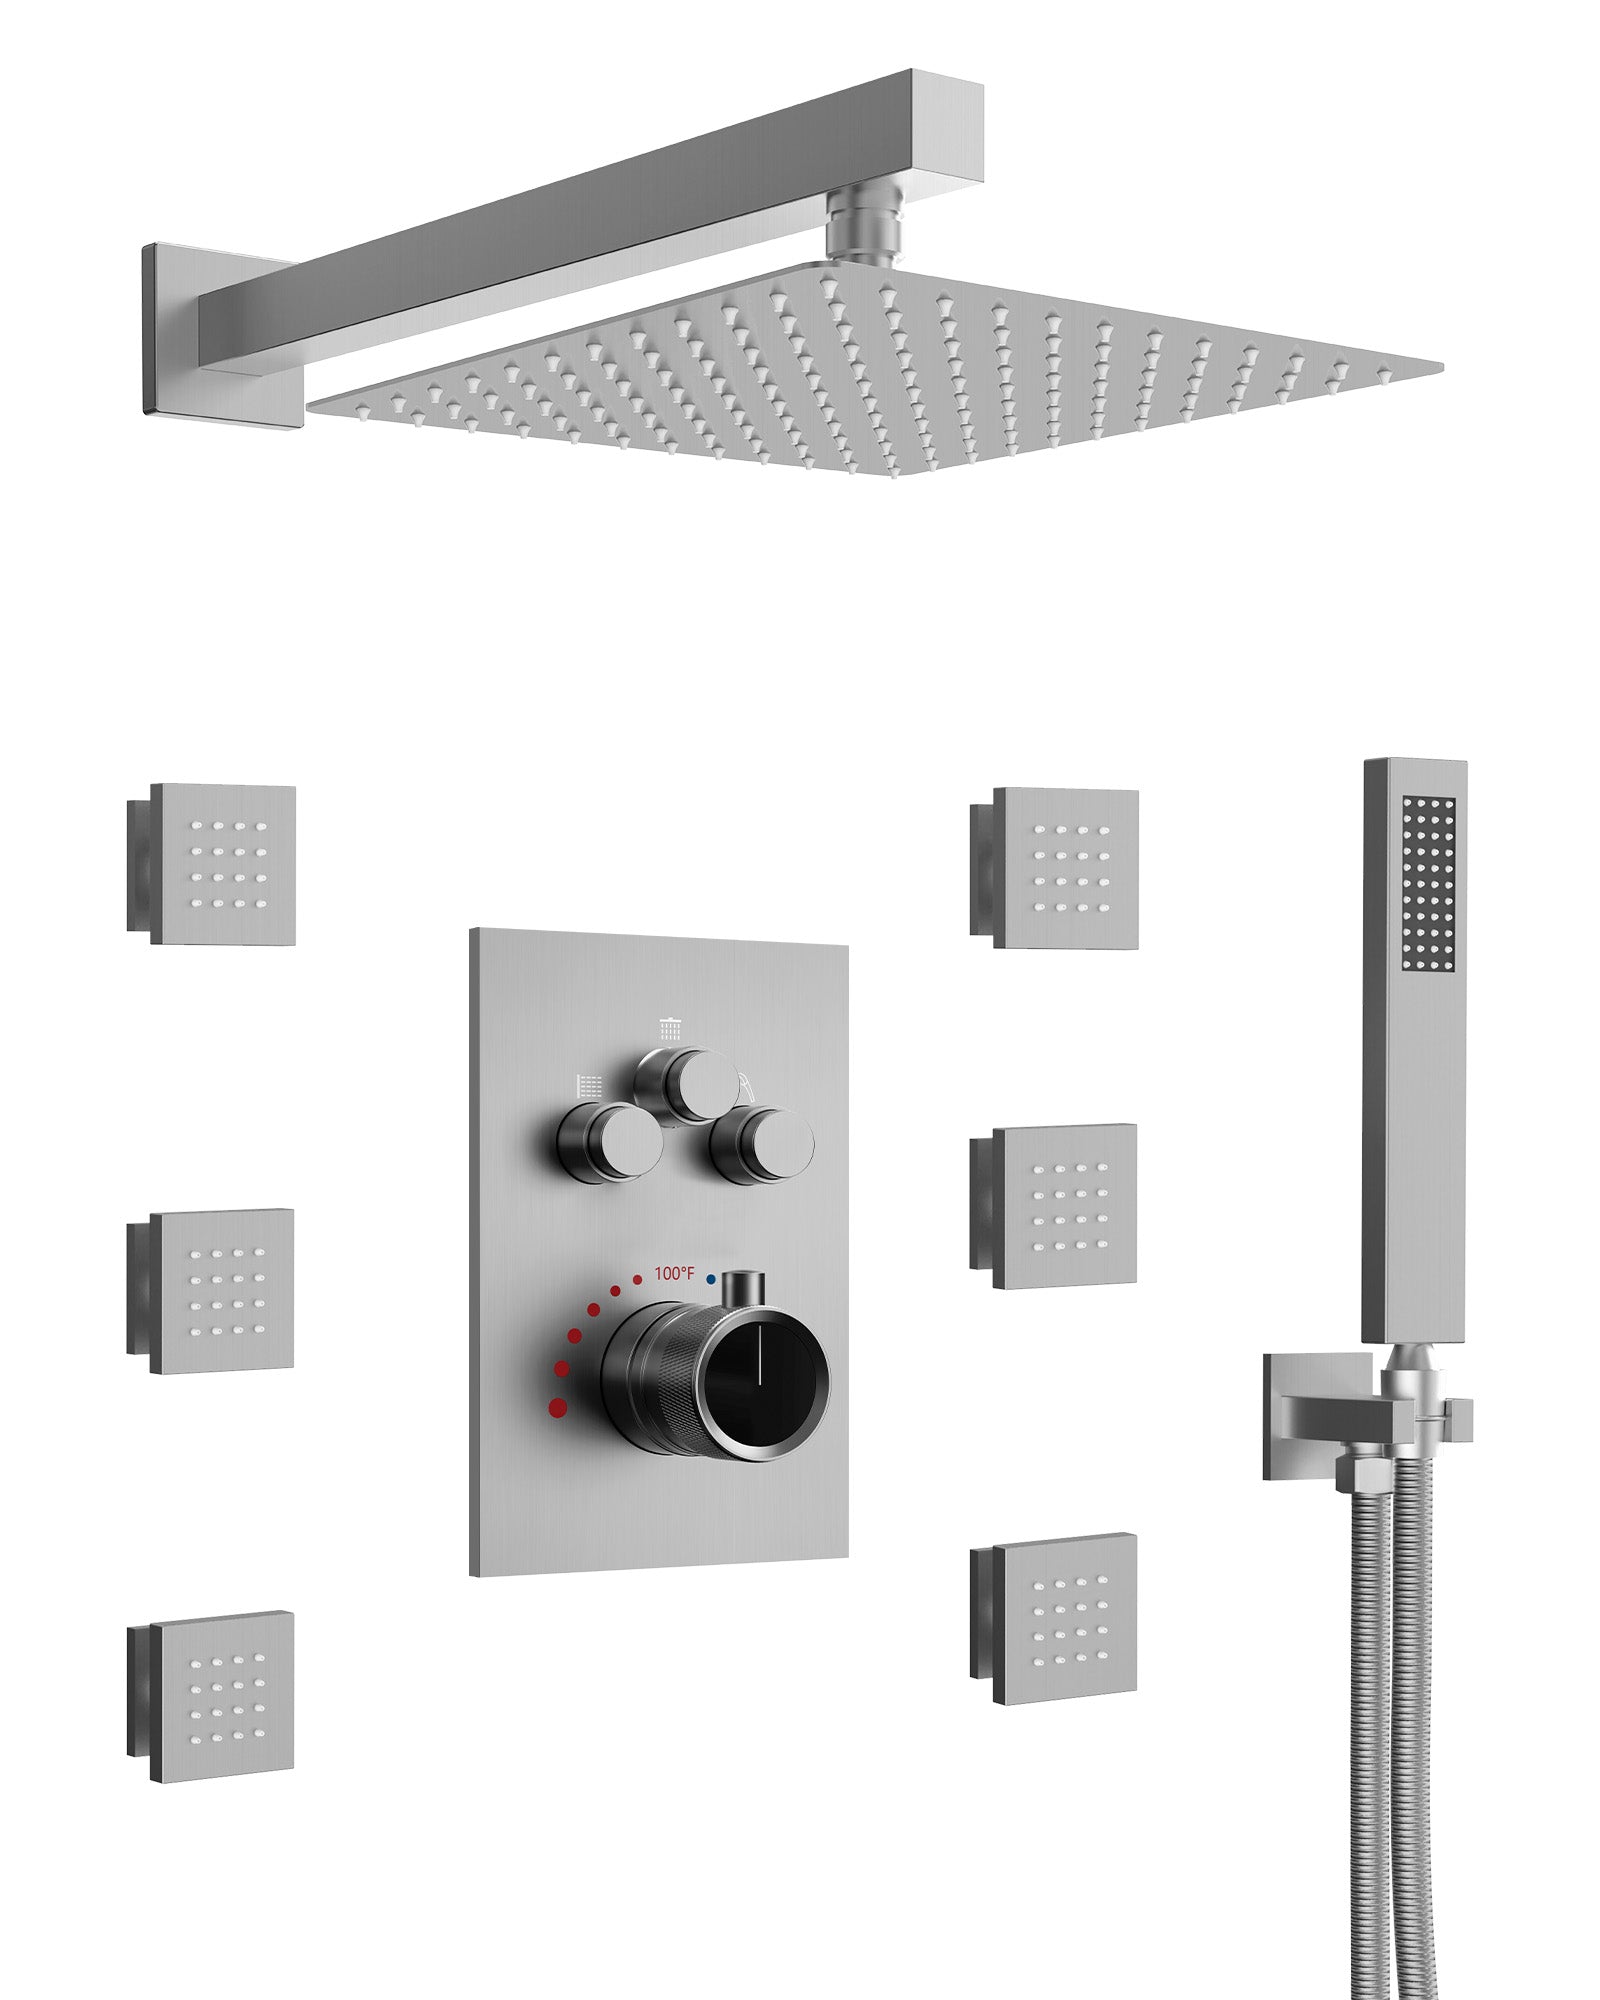 EVERSTEIN Rain Shower System with Body Massage Jets - 12" Square Shower Head, Brushed Nickel Shower System